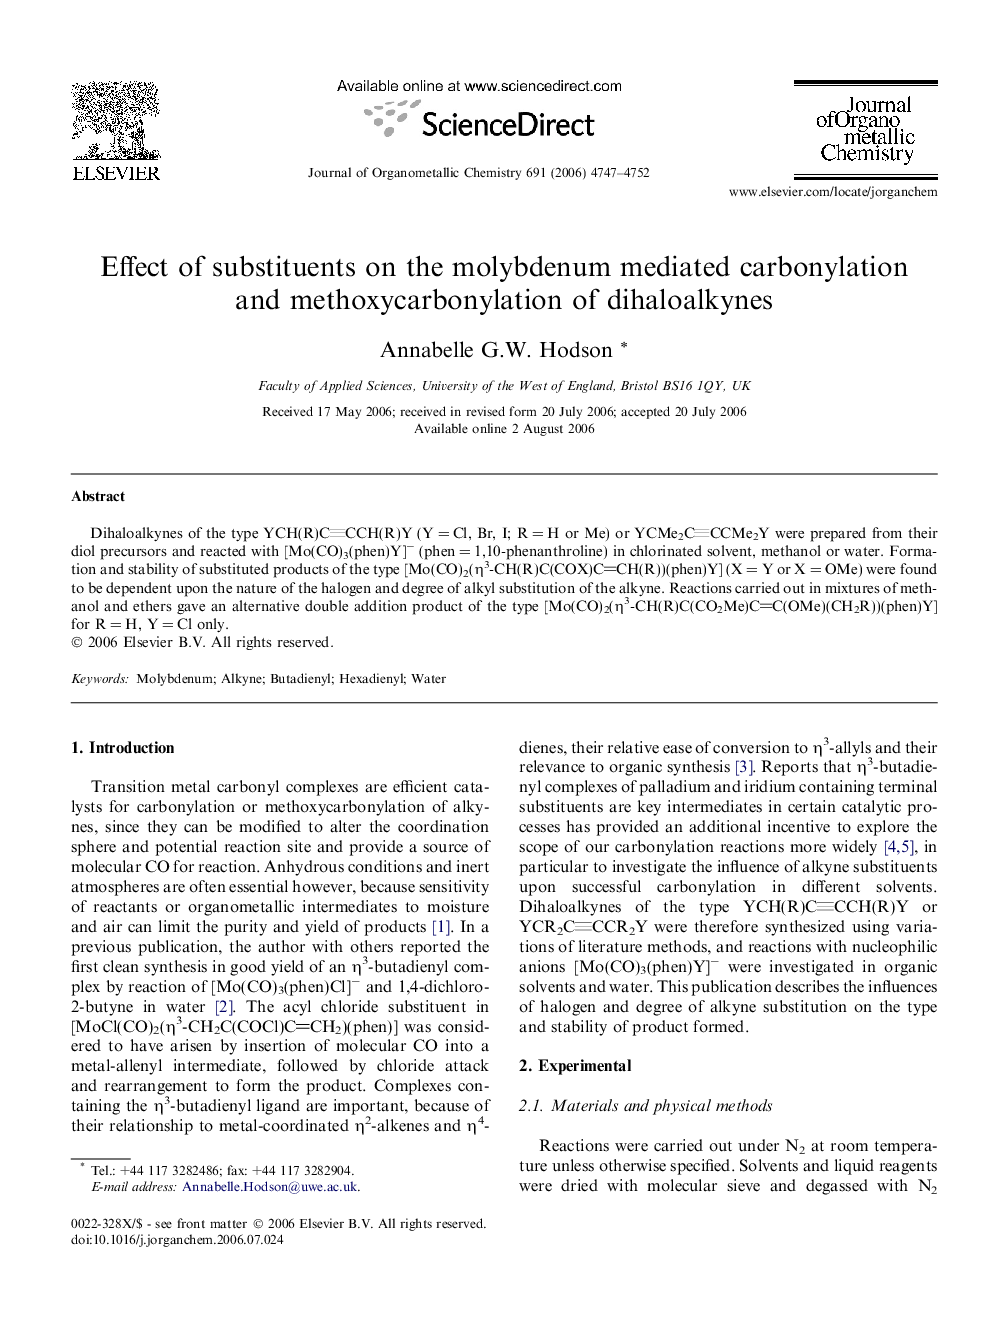 Effect of substituents on the molybdenum mediated carbonylation and methoxycarbonylation of dihaloalkynes